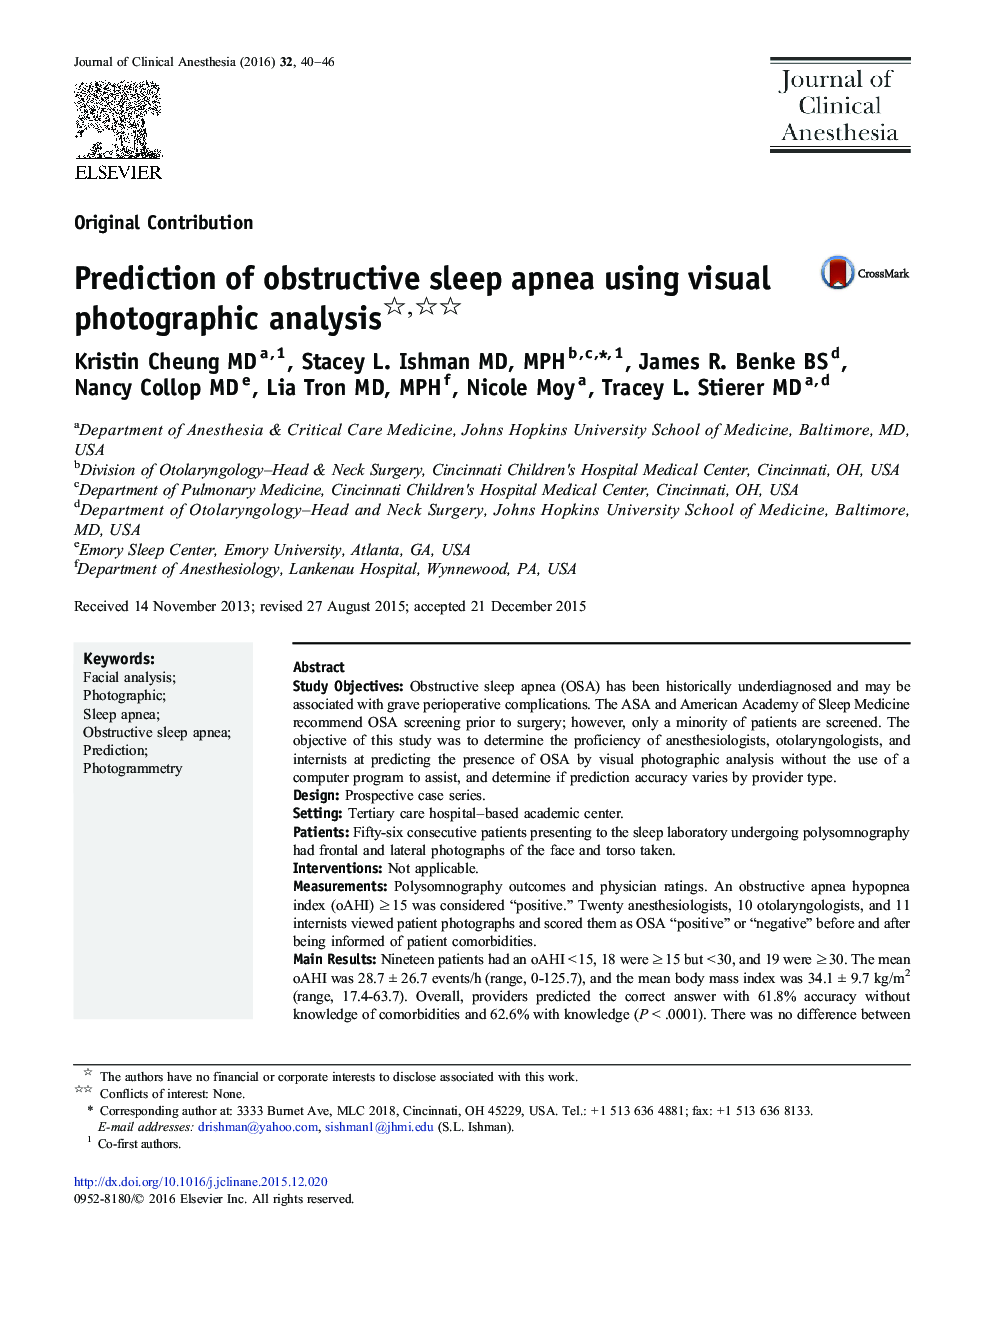 Original ContributionPrediction of obstructive sleep apnea using visual photographic analysis